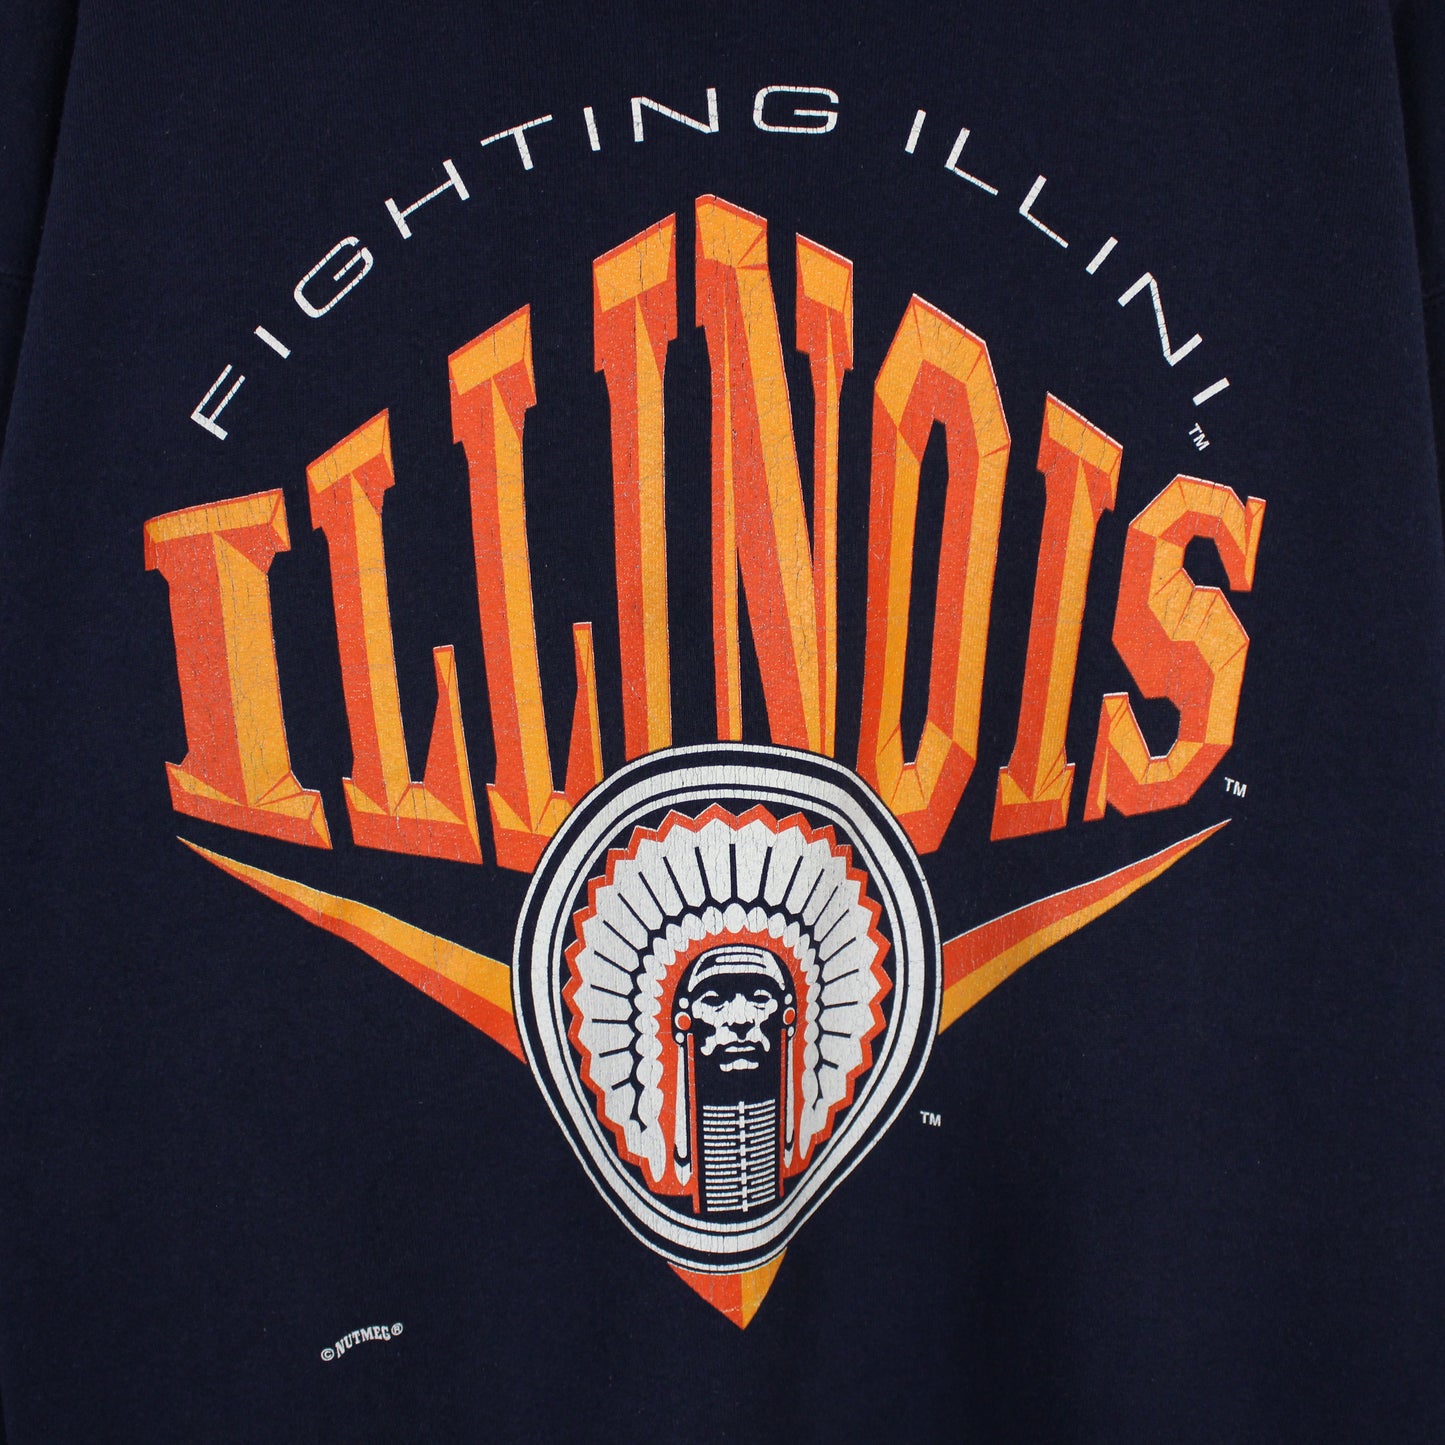 Vintage 1994 Illinois Fighting Illini NCAA Sweatshirt - XL